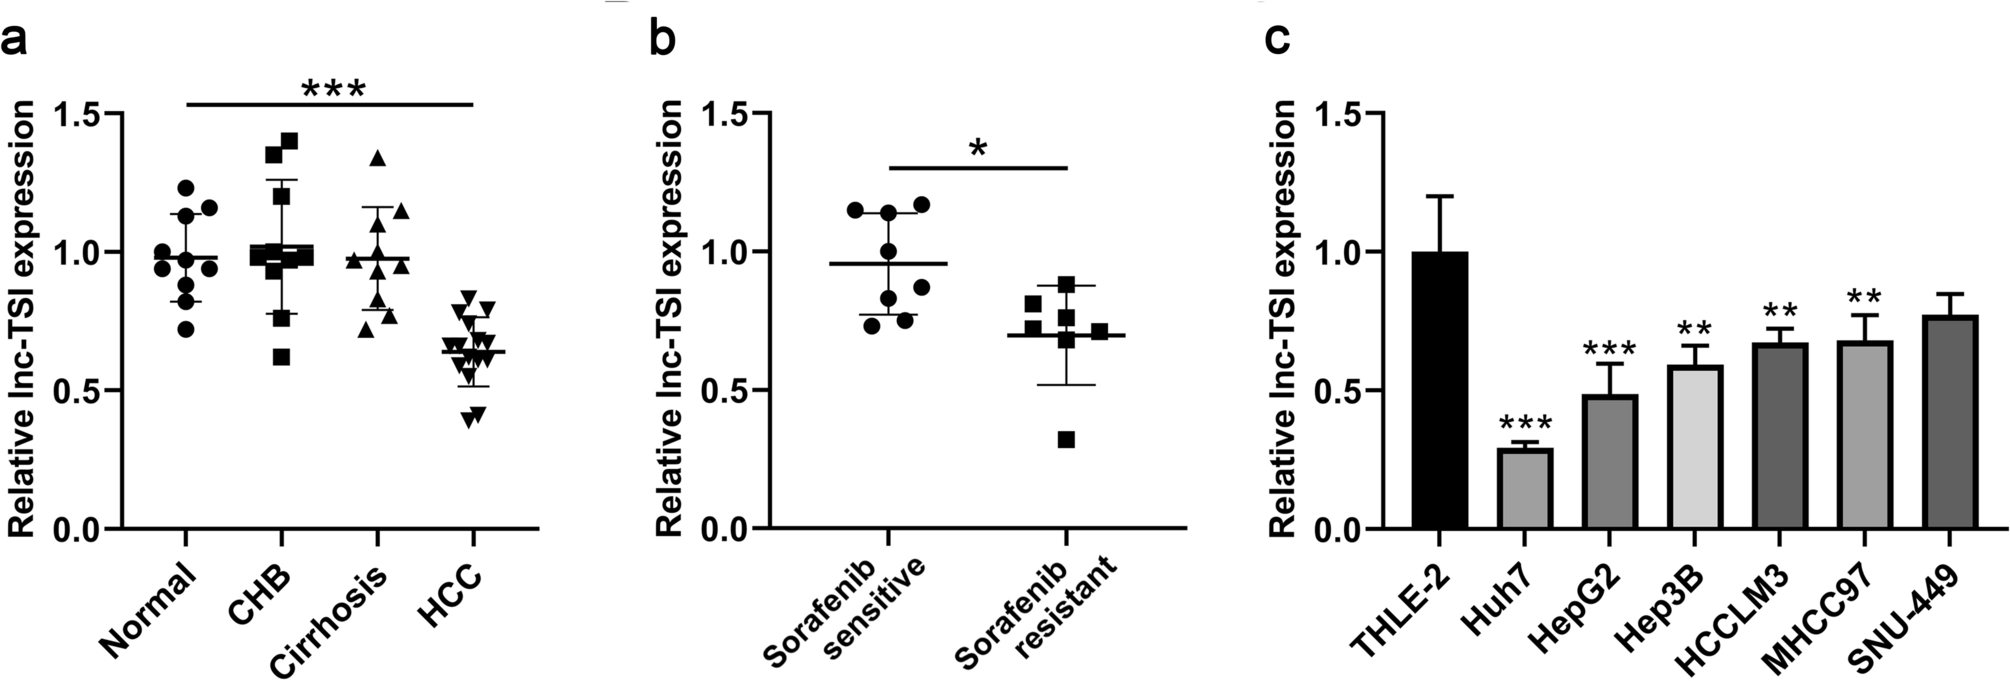 The lncRNA lnc-TSI antagonizes sorafenib resistance in hepatocellular carcinoma via downregulating miR-4726-5p expression and upregulating KCNMA1 expression